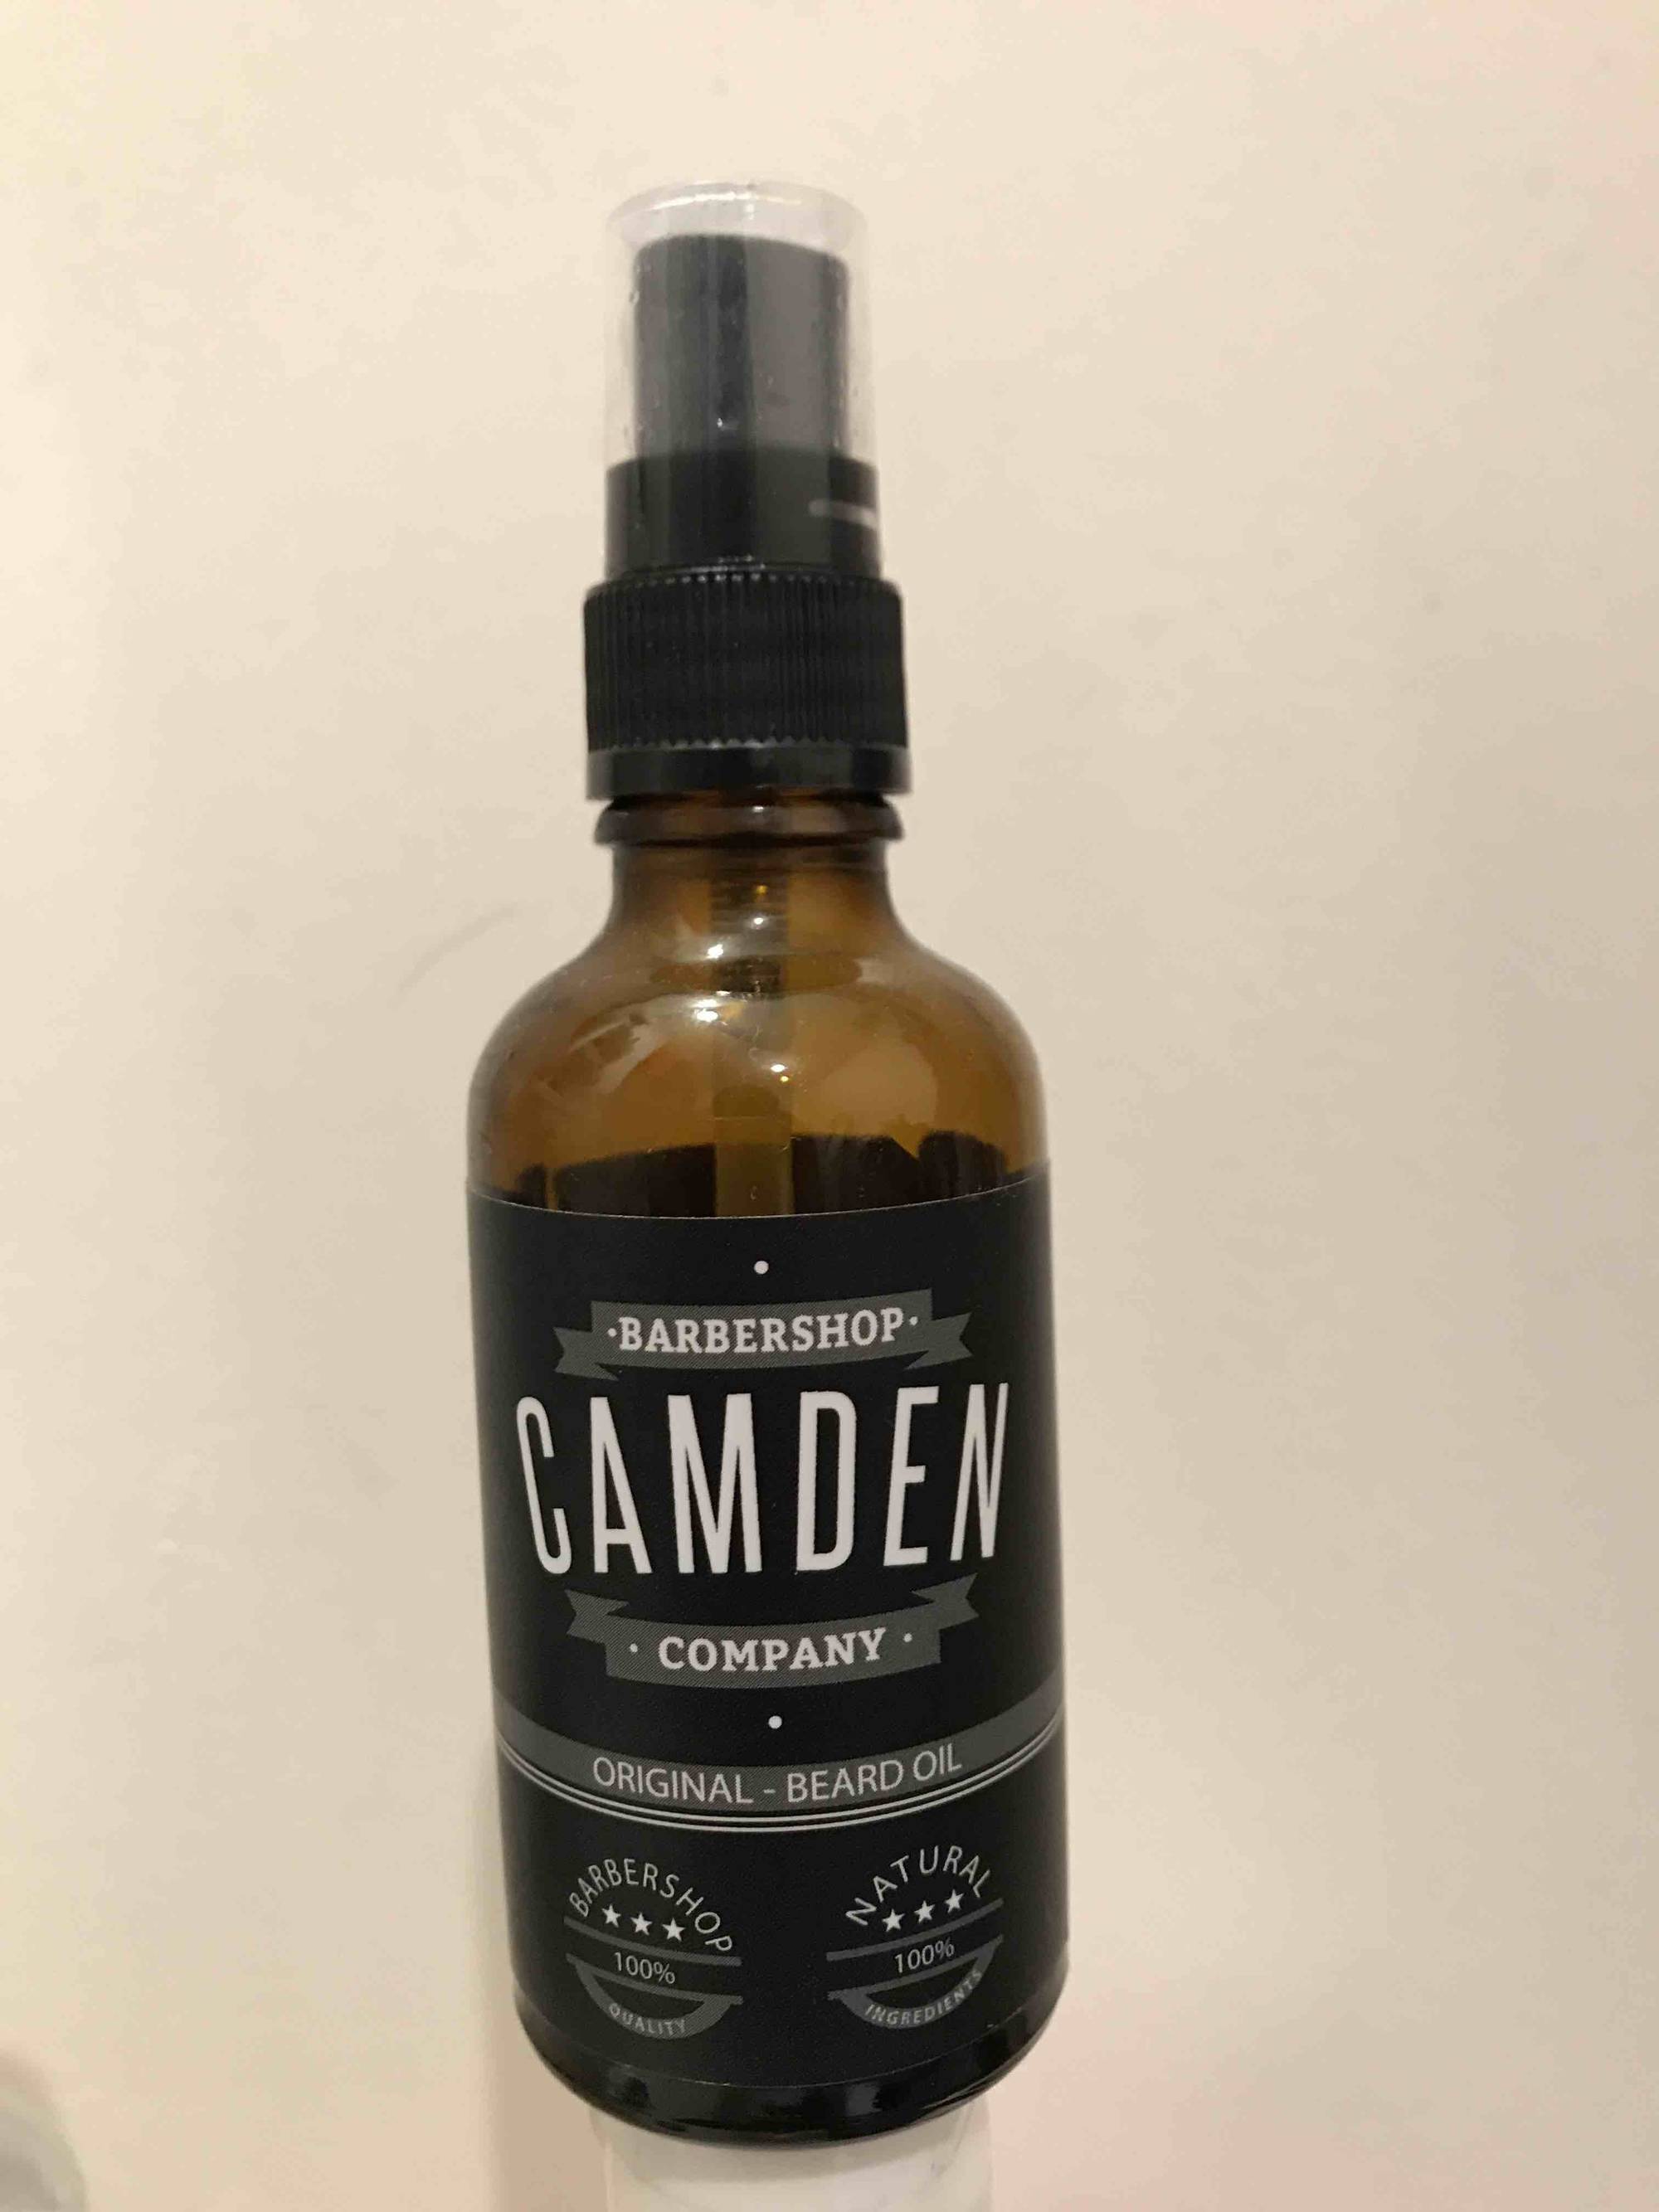 CAMDEN BARBERSHOP - Original - Beard oil